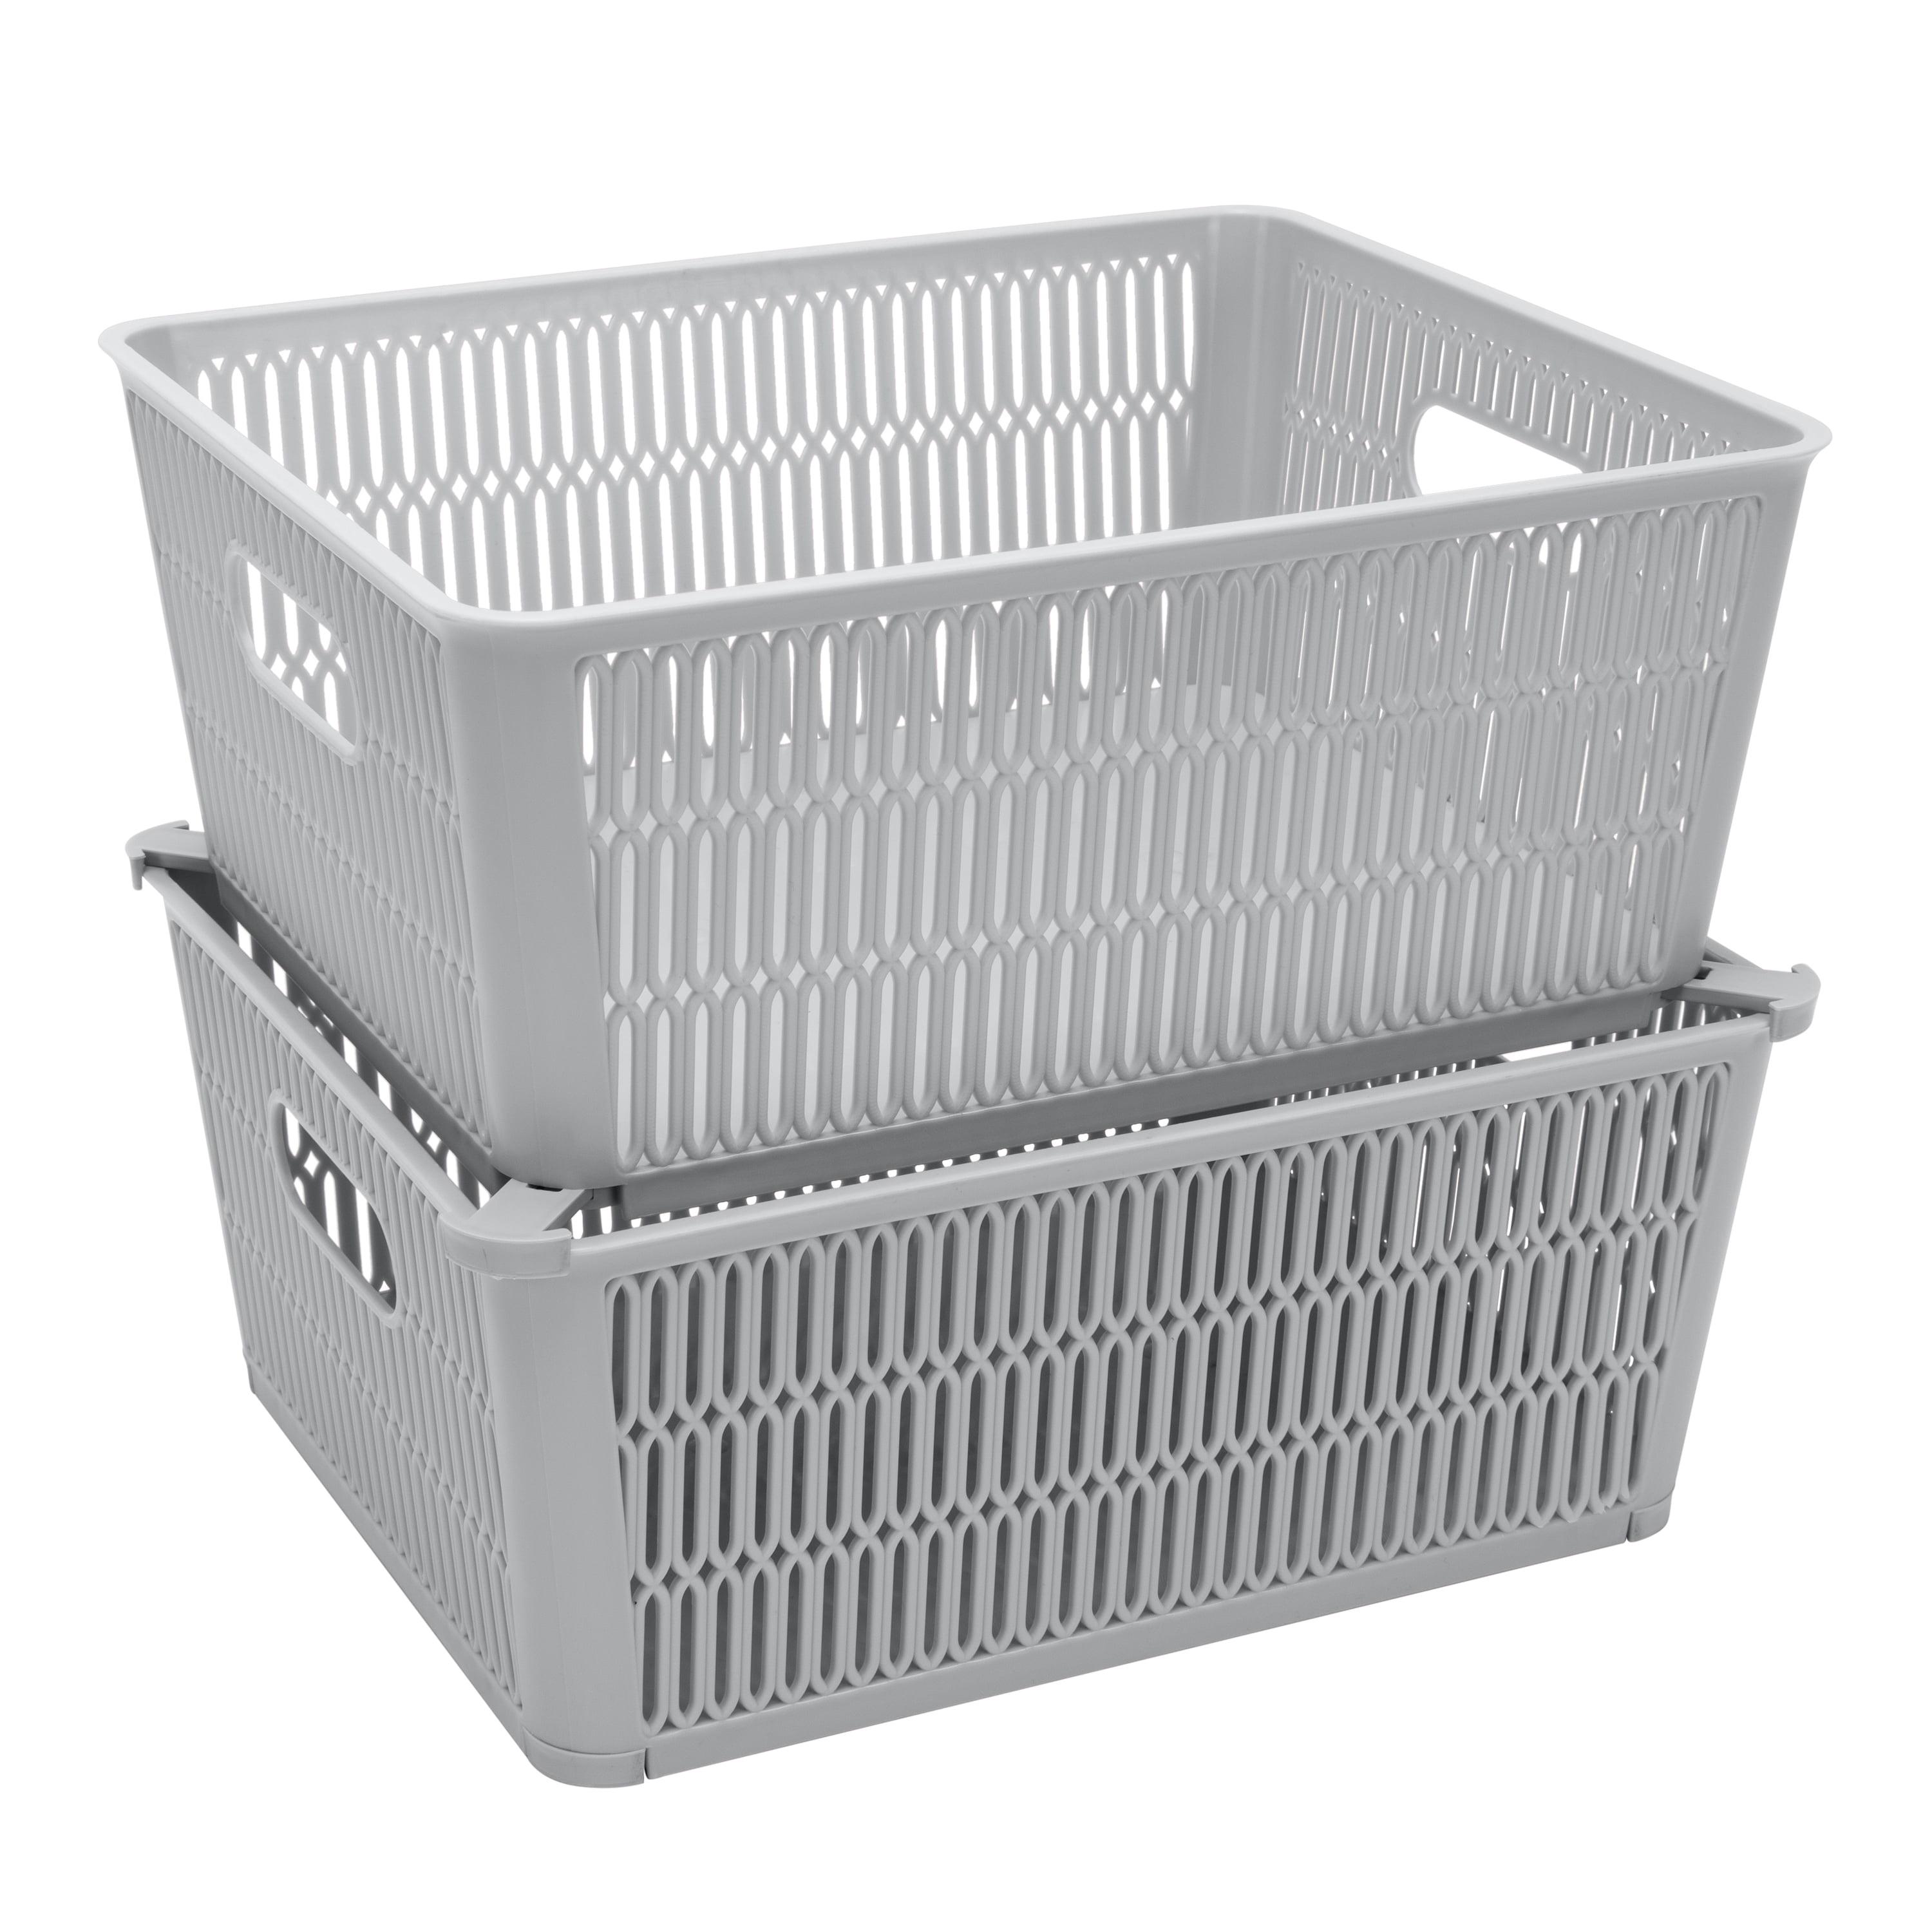 Simplify Slide 2 Stack Grey Plastic Storage Tote Baskets, 2-Pack